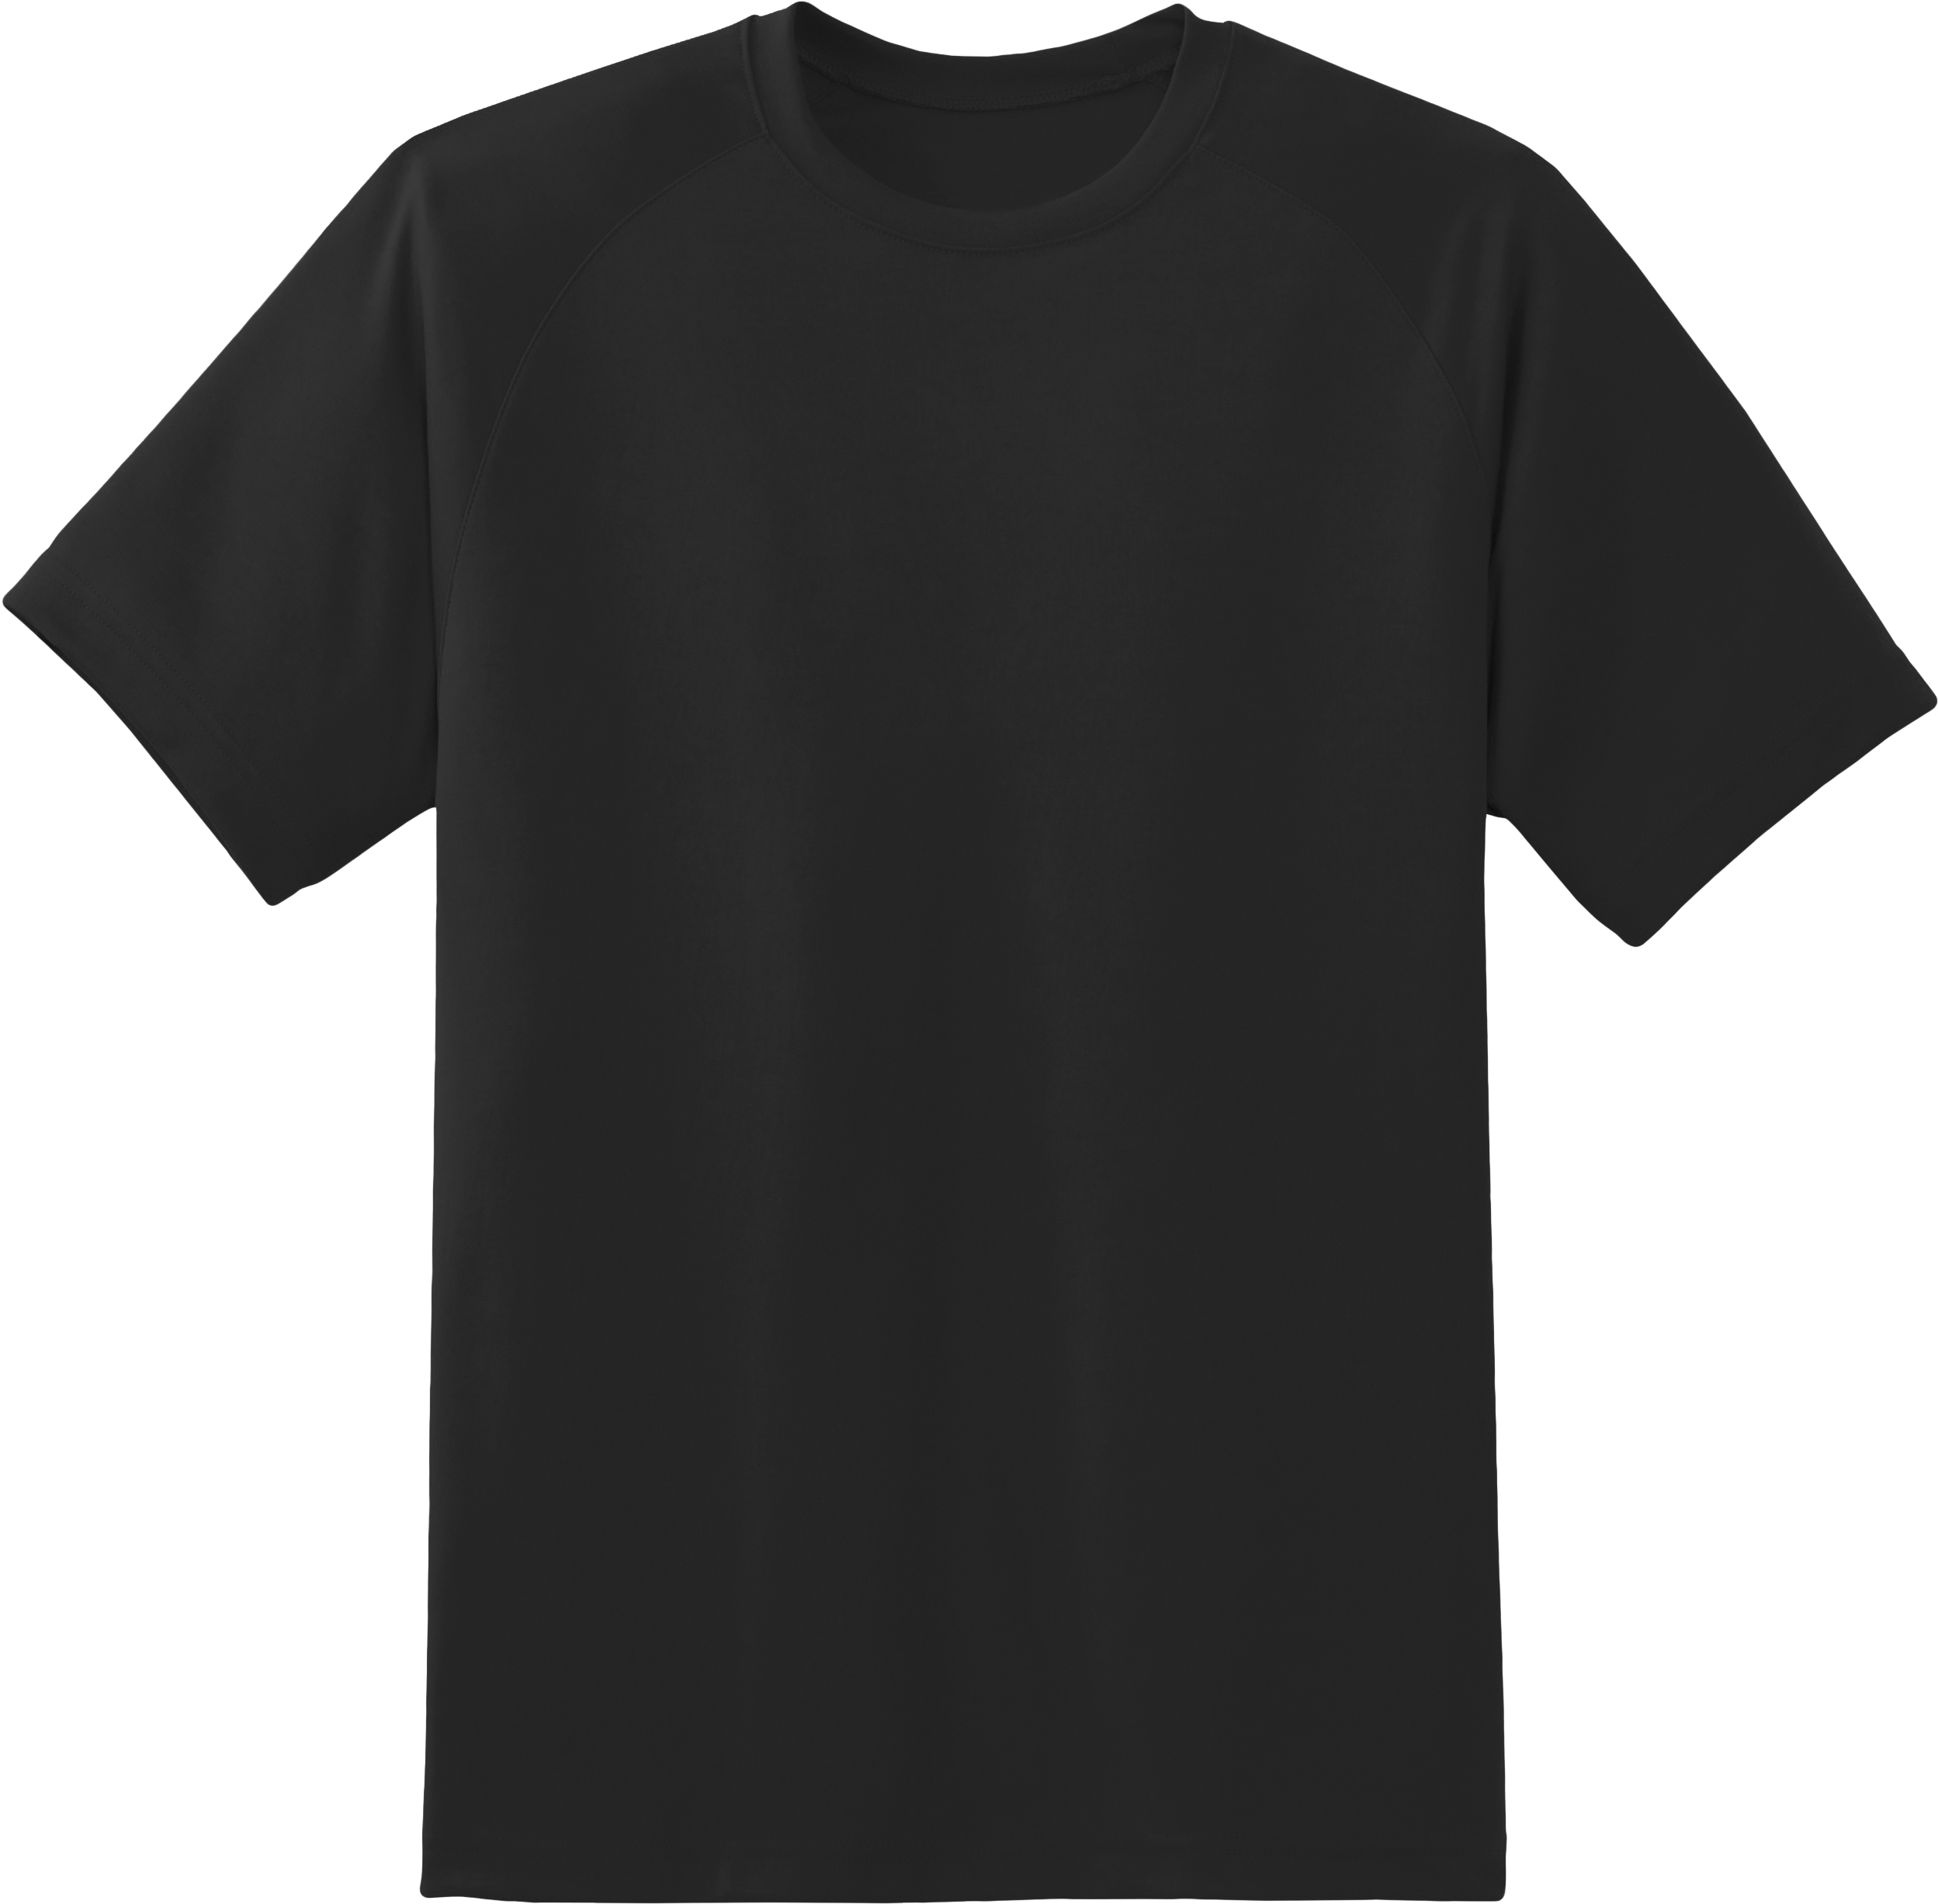 Download Black T Shirt Png Transparent Image - Black Shirts Png PNG ...